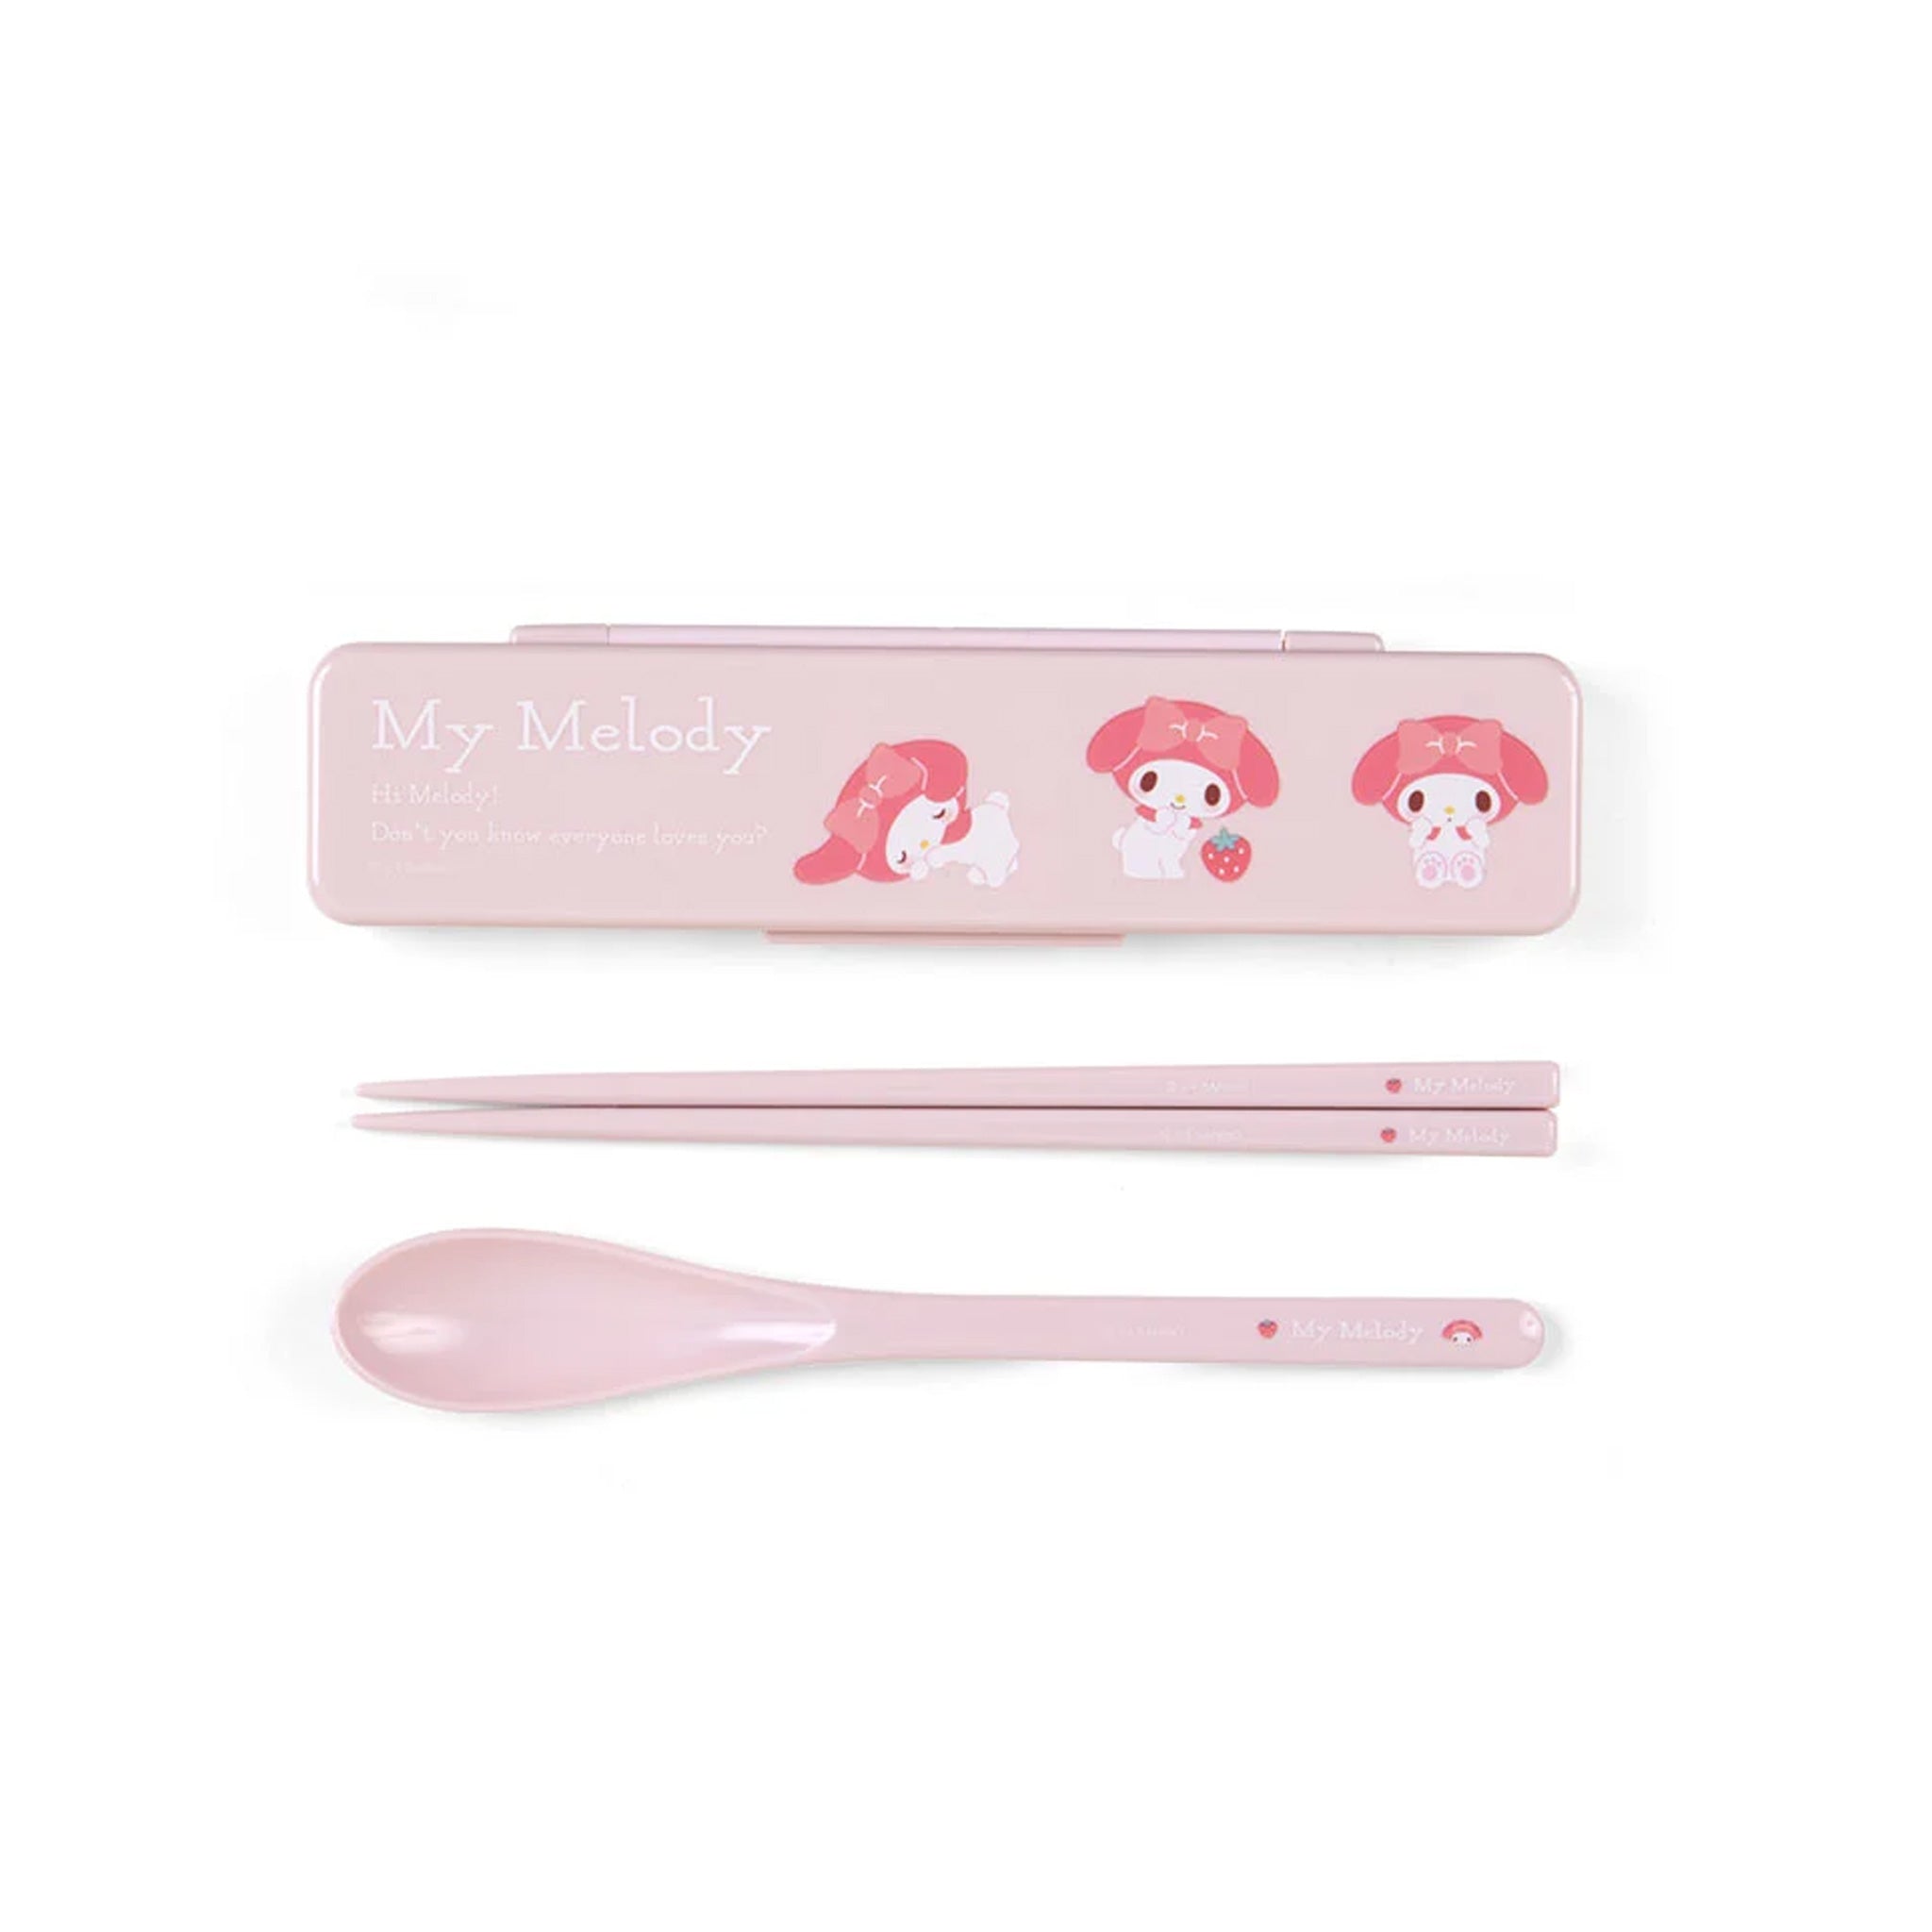 Sanrio Chopsticks and spoon set